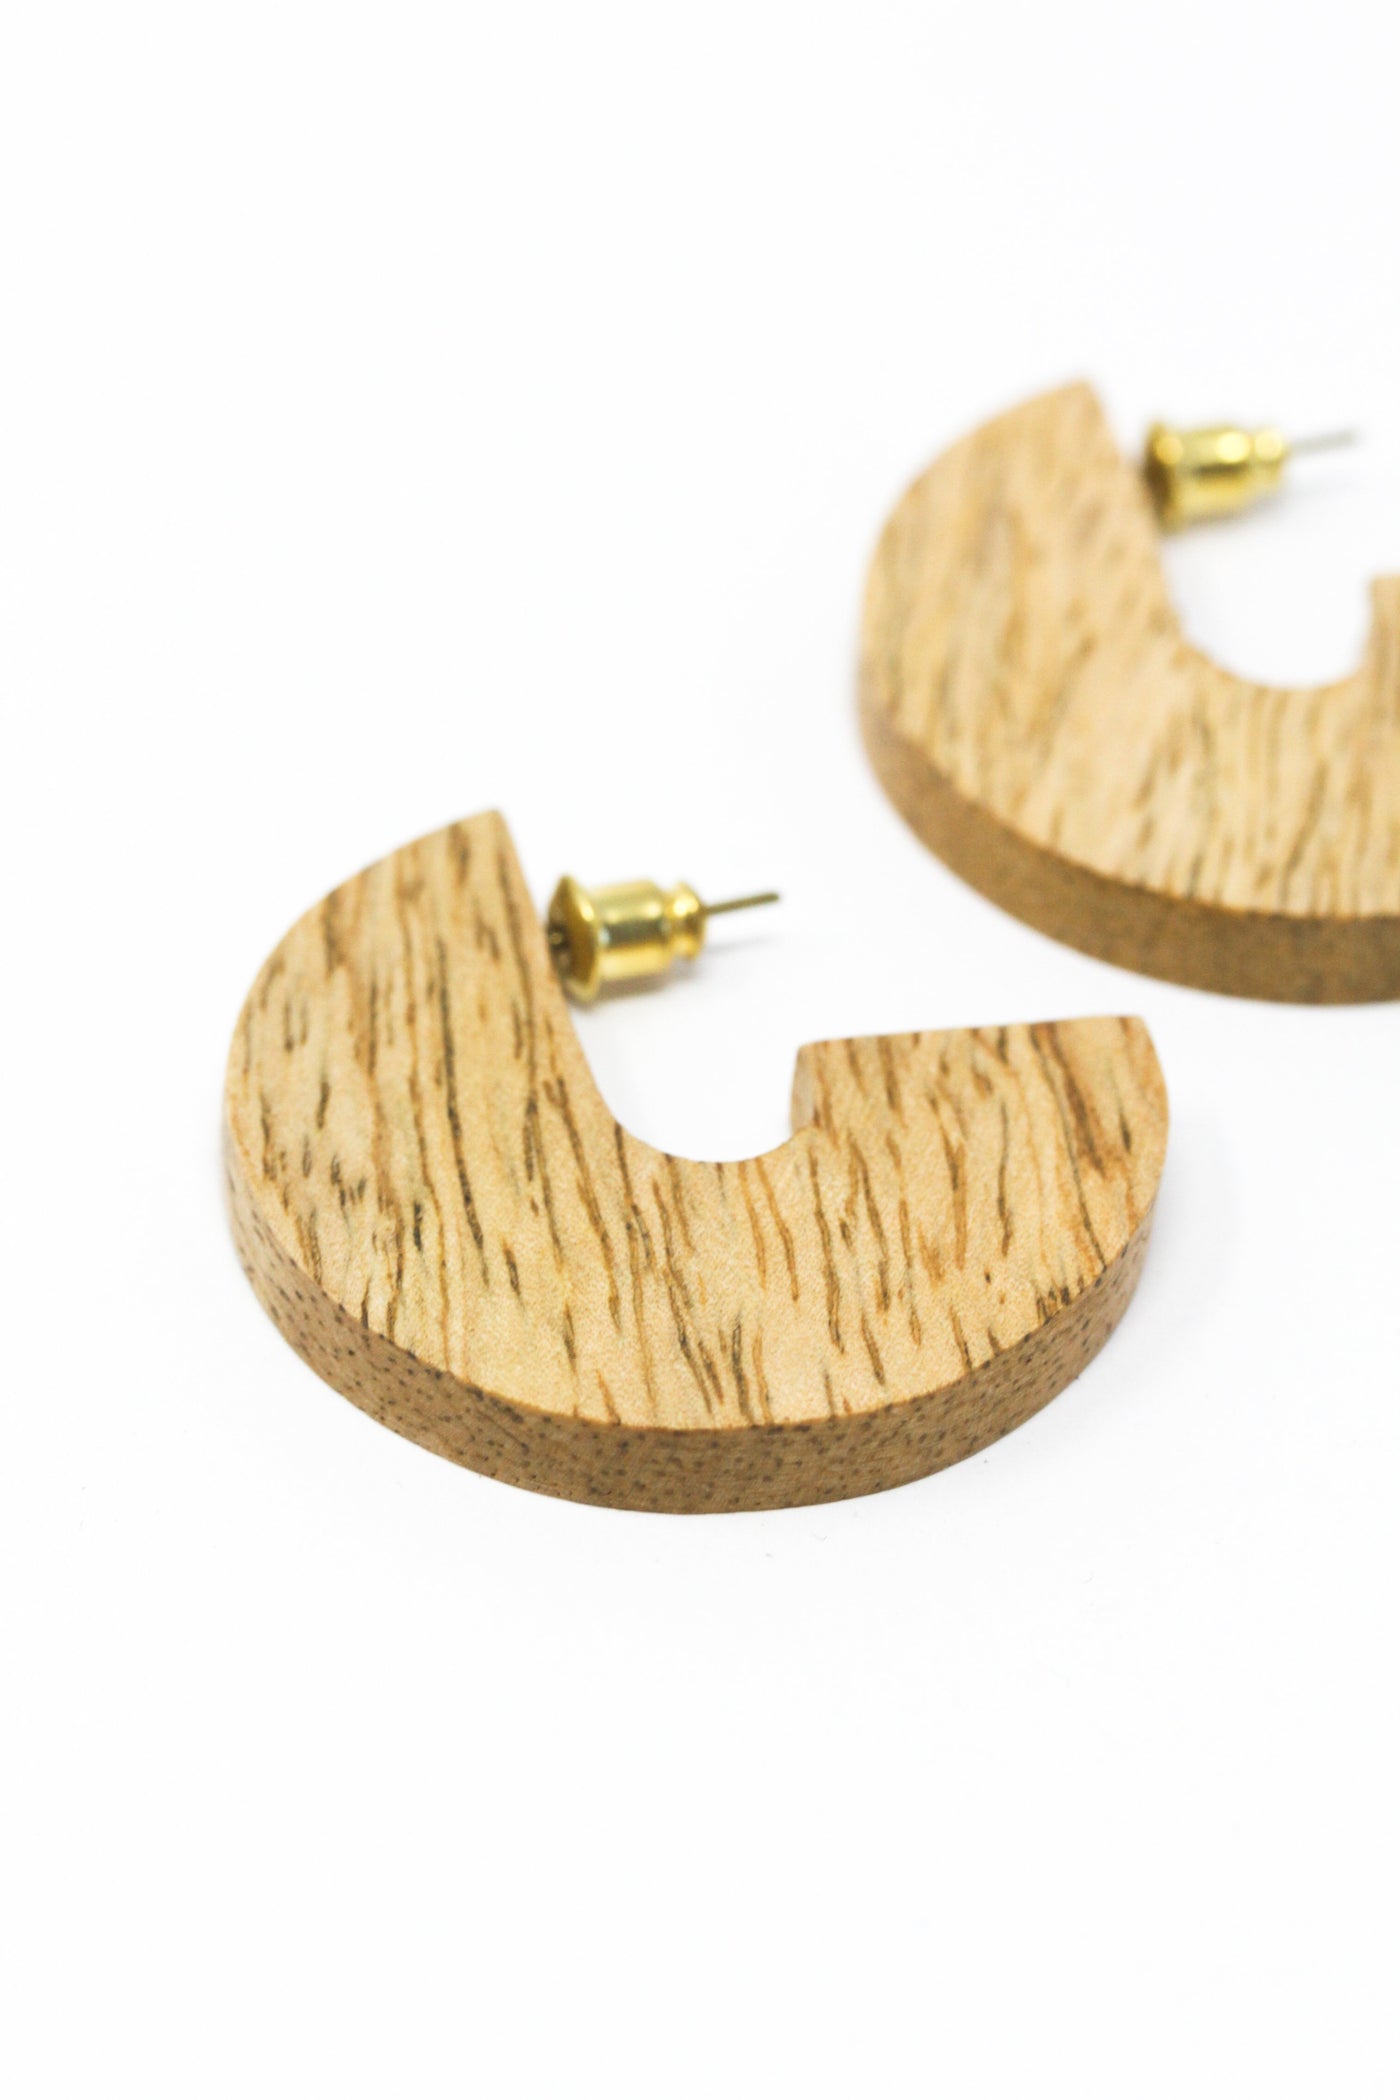 Wood Disc Earrings - Mango Wood